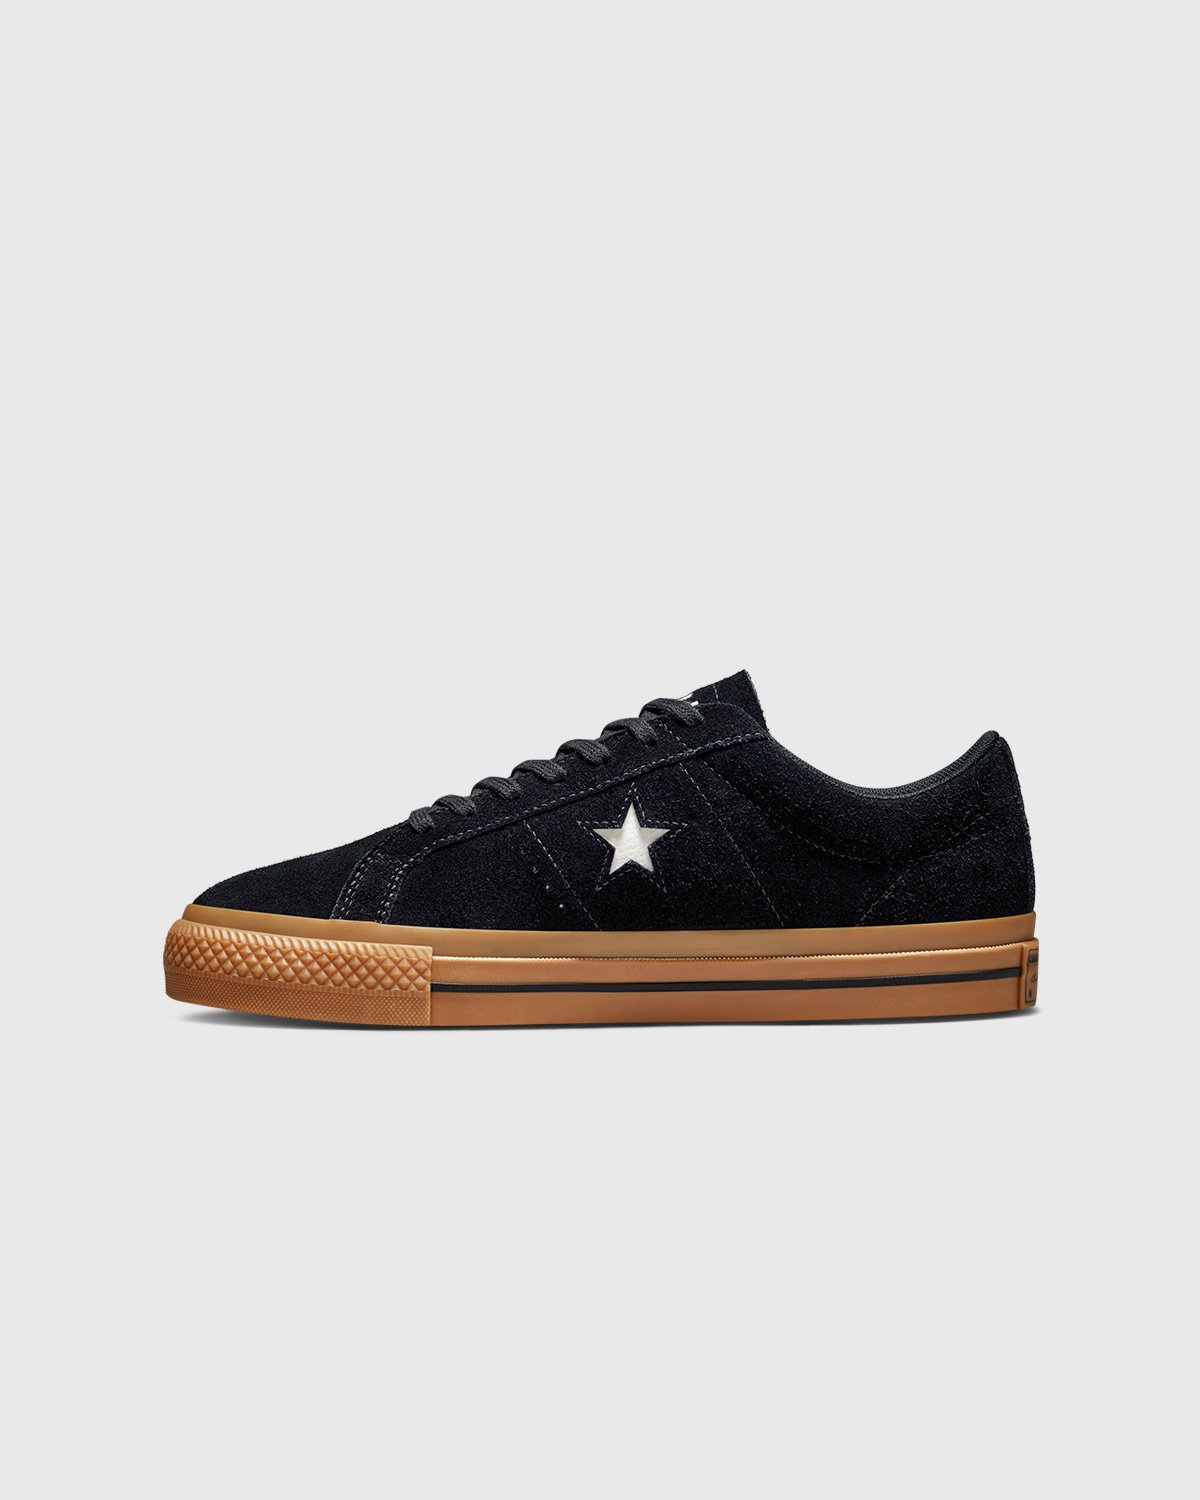 Converse x Peanuts - One Star Ox Black/Egret/Gum Honey - Footwear - Black - Image 2